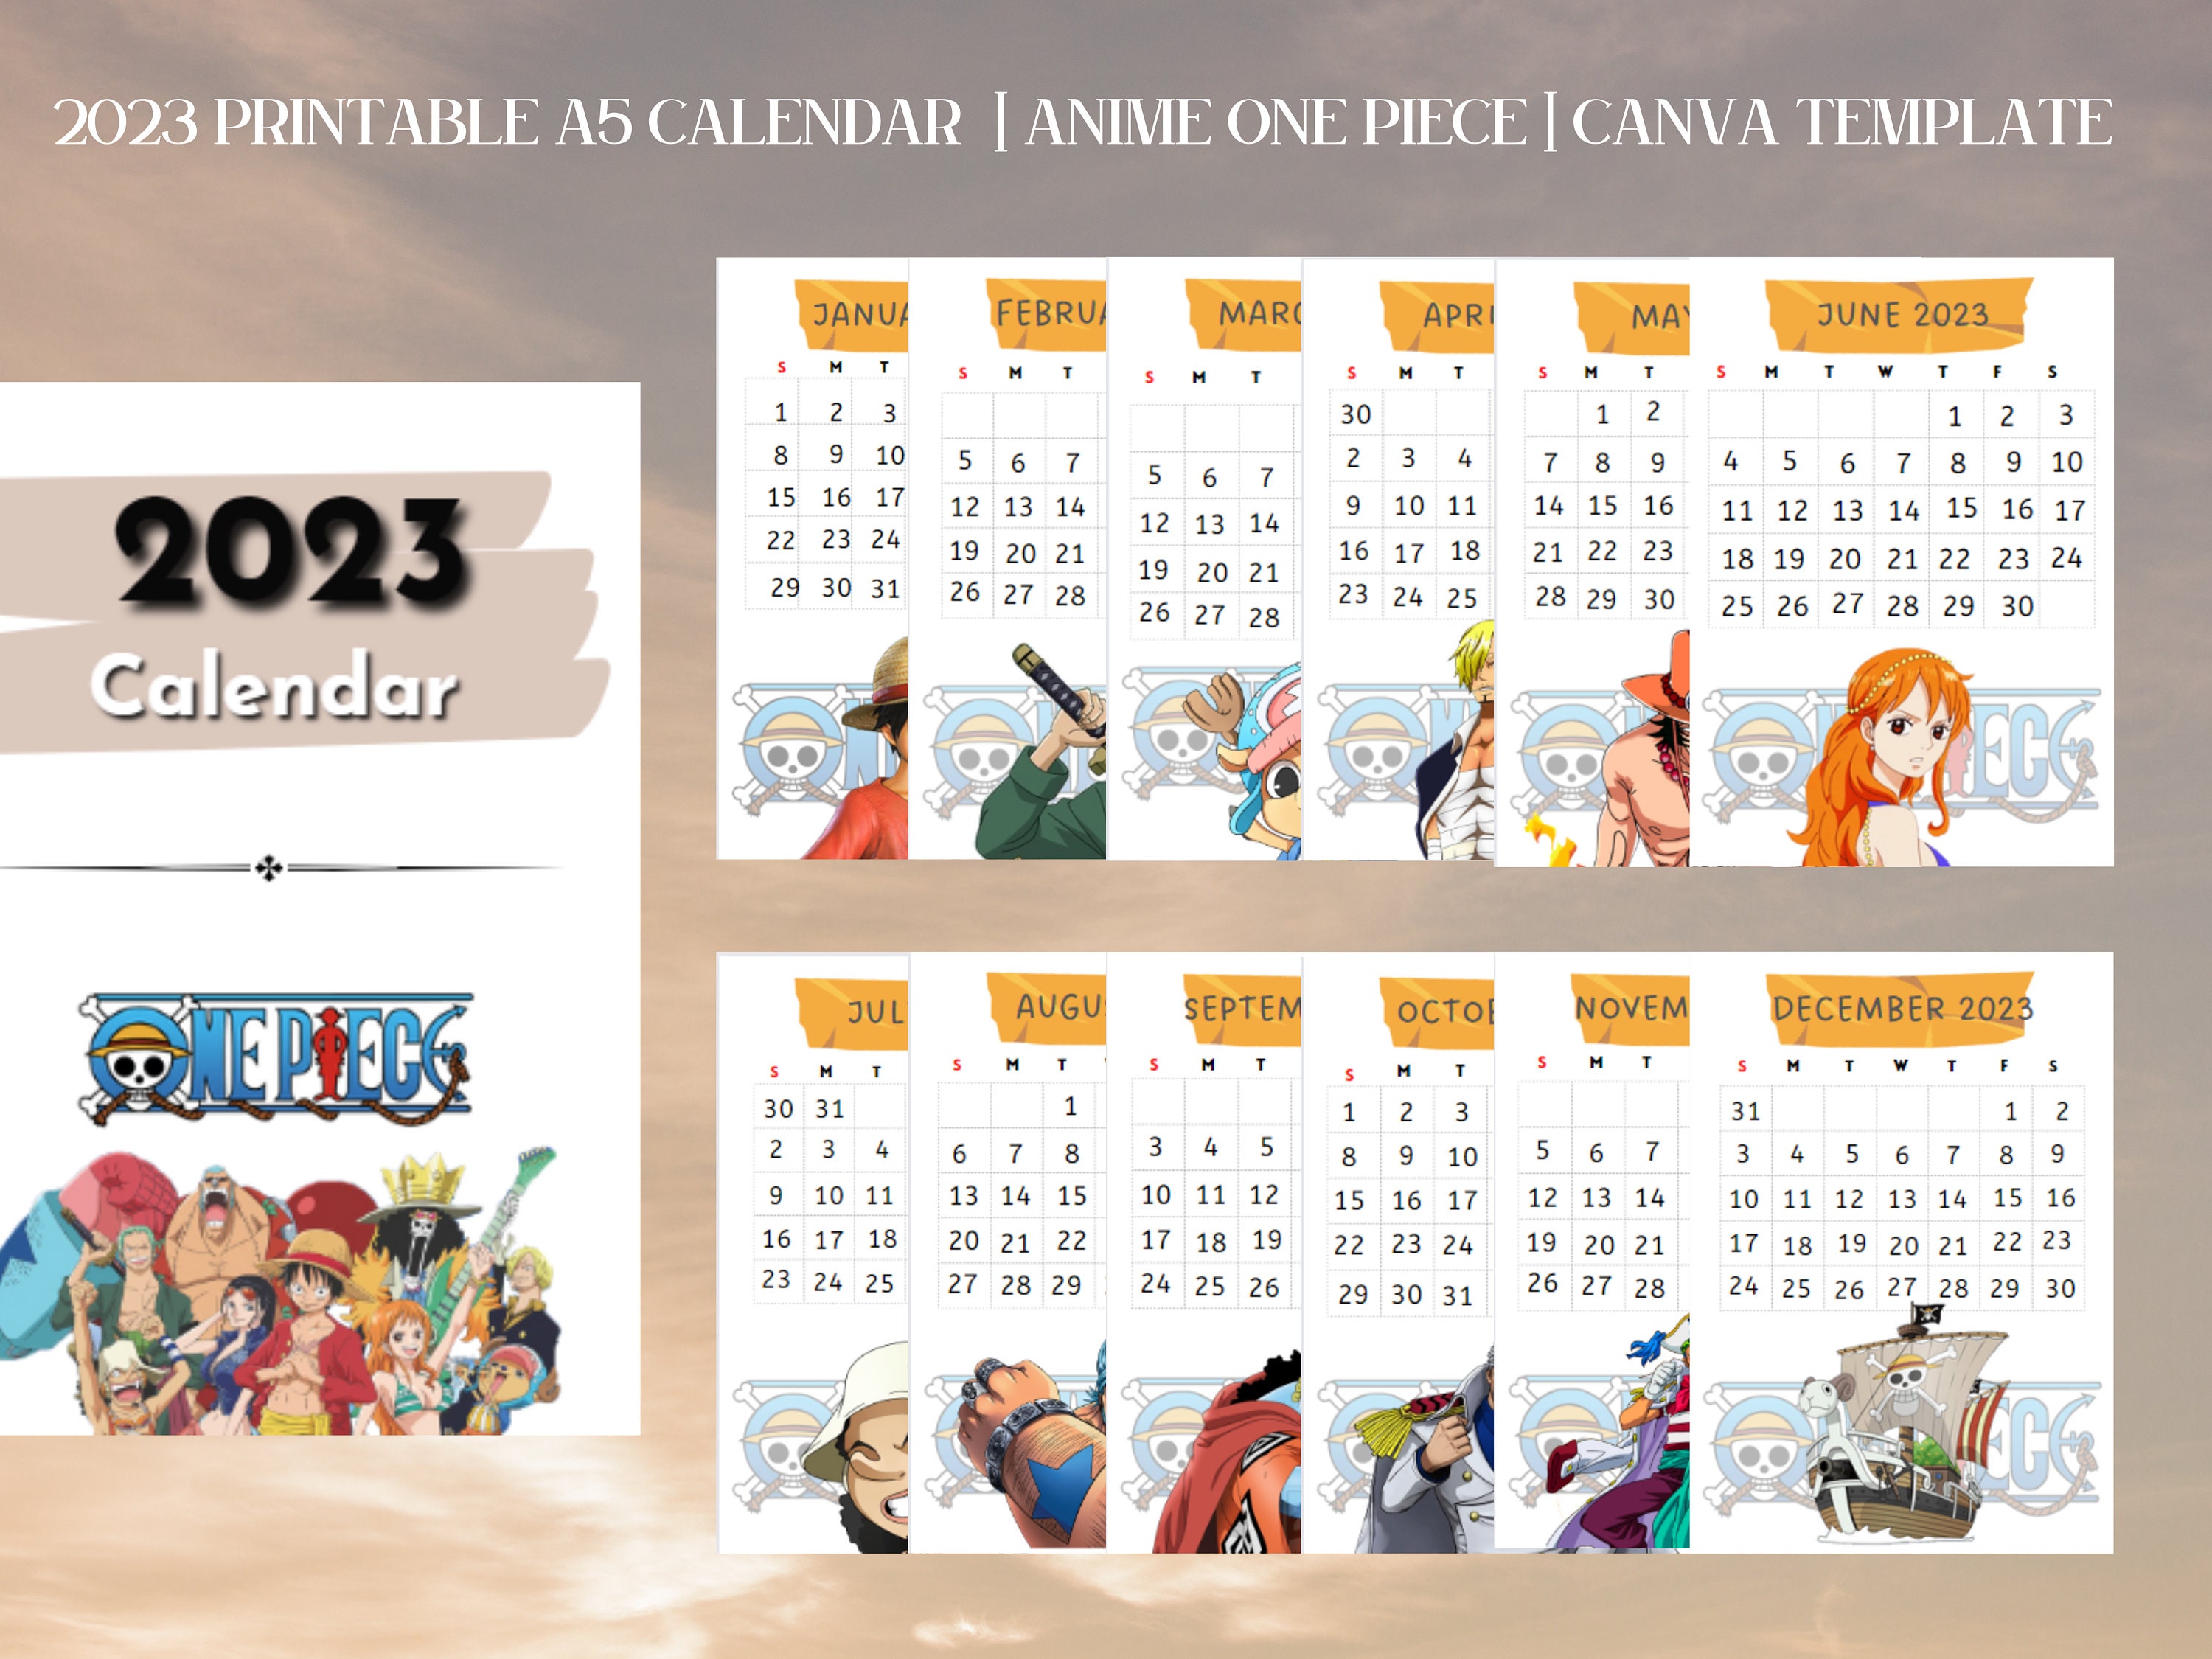 Printable A5 Calendar 2023 One Piece Anime Canva Template Etsy